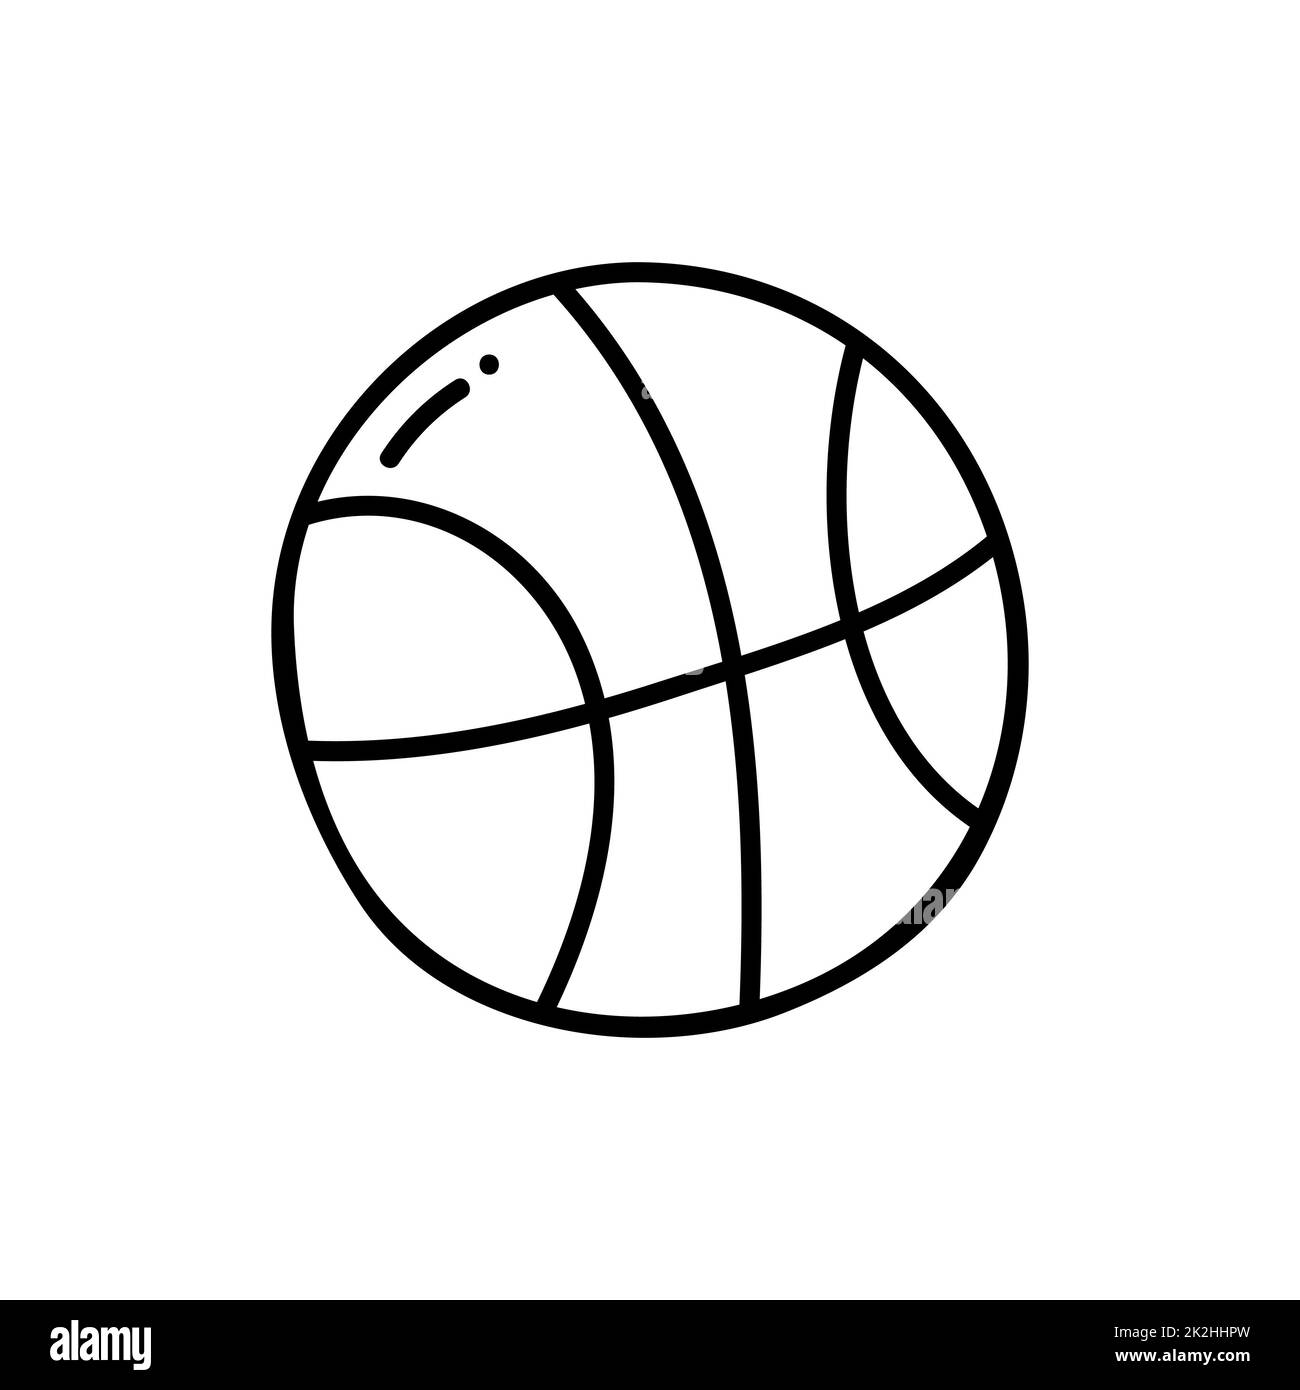 Vector de la imagen de pelota de baloncesto